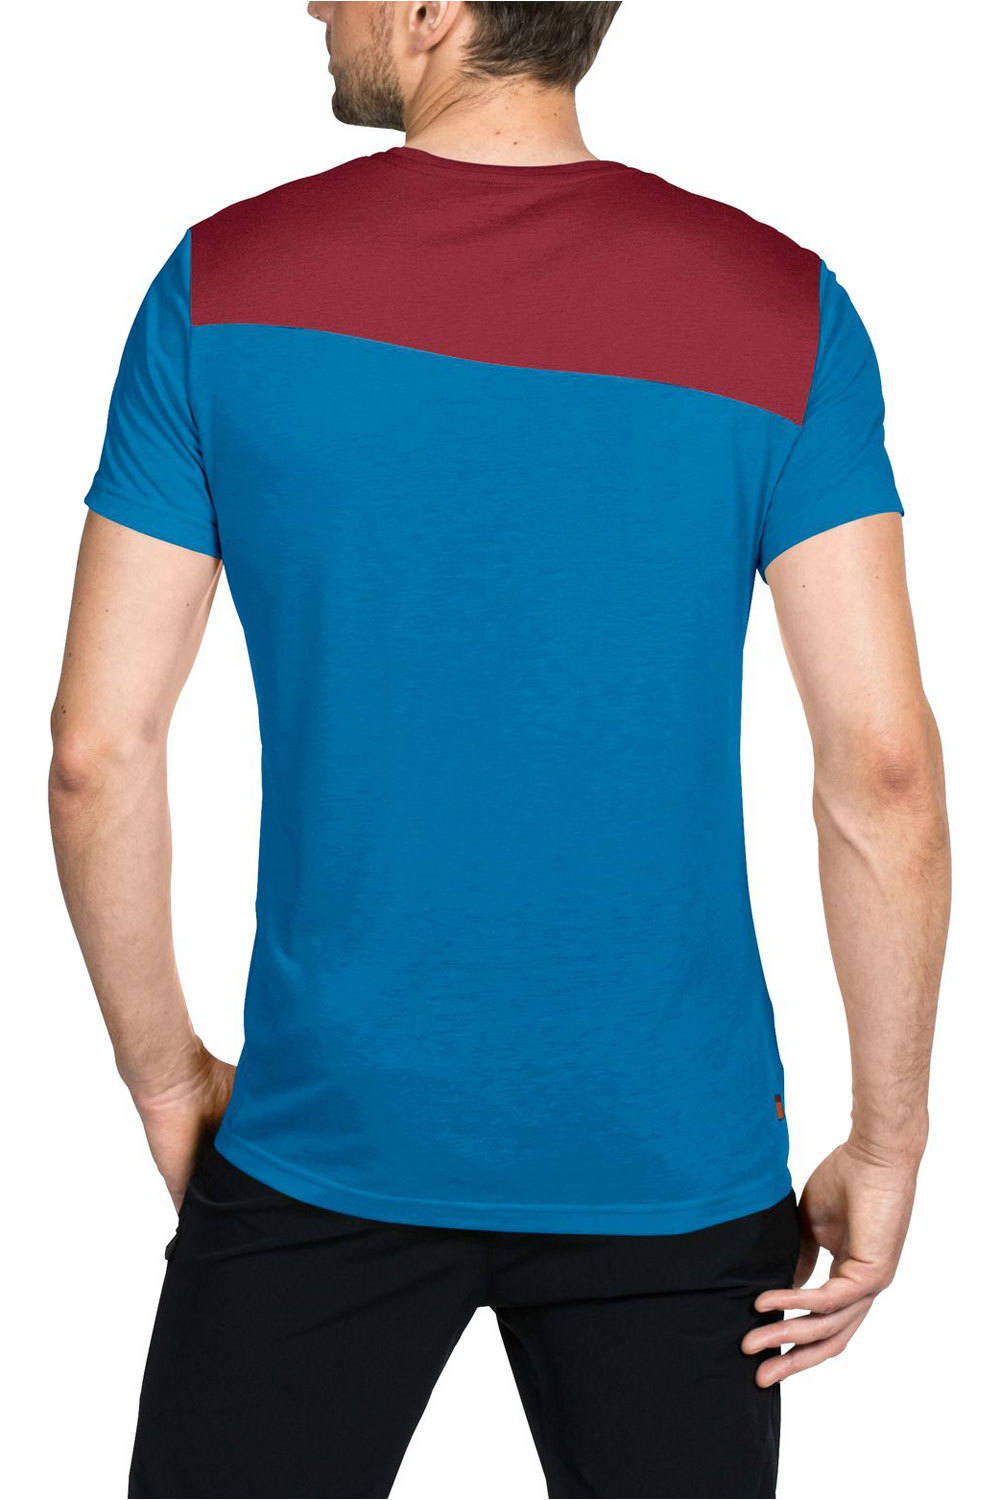 Vaude camiseta montaña manga corta hombre Mens Sveit T-Shirt vista trasera